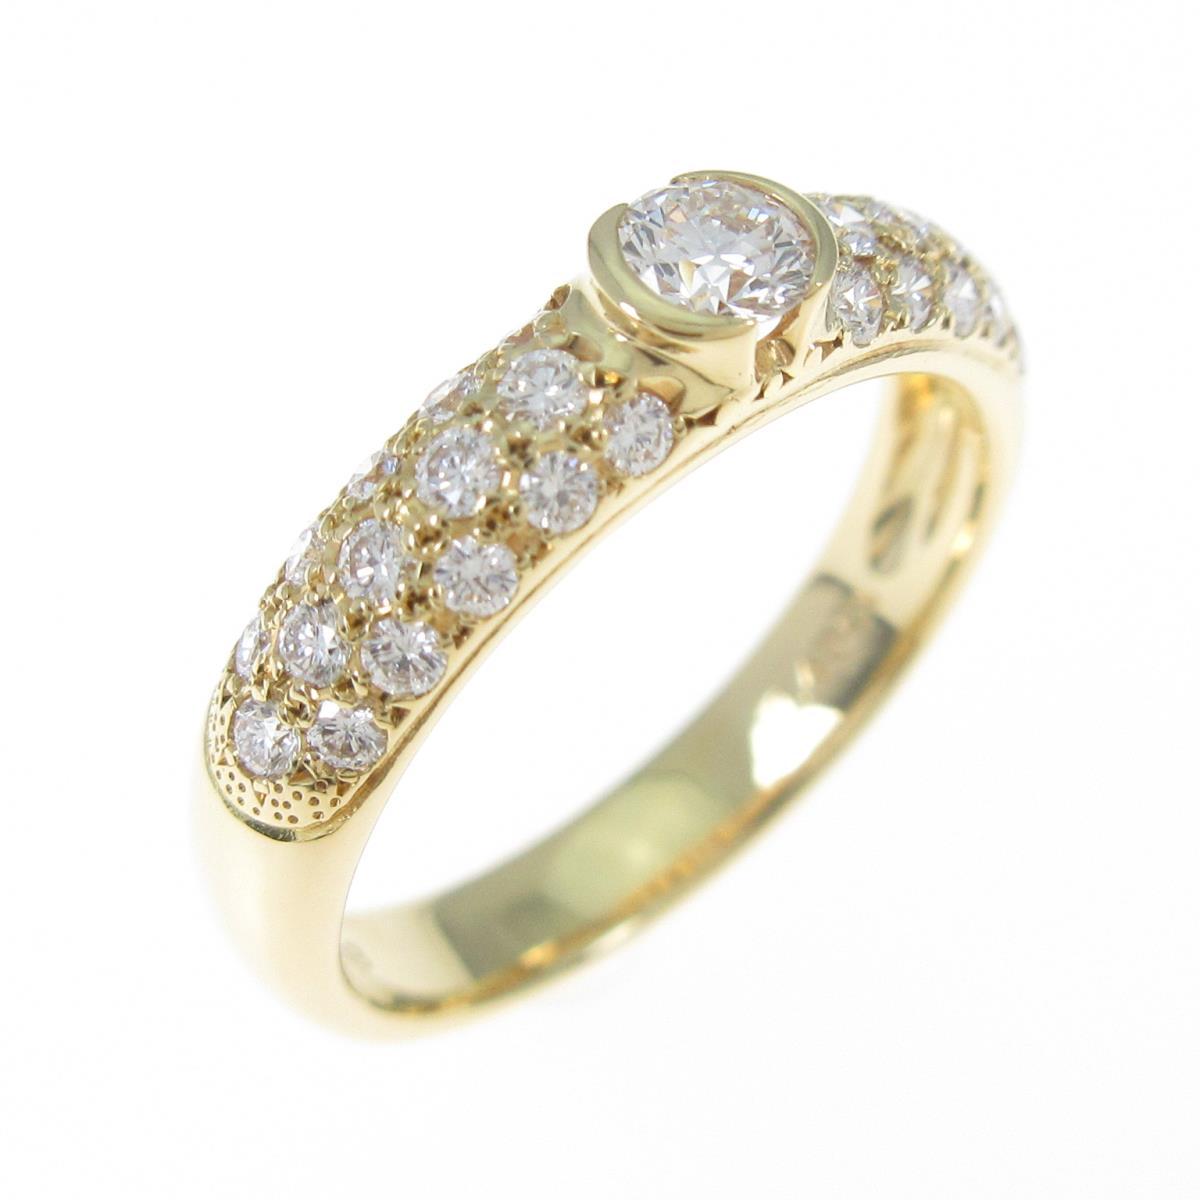 Authentic Mikimoto Diamond ring #260-003-051-7752 | eBay